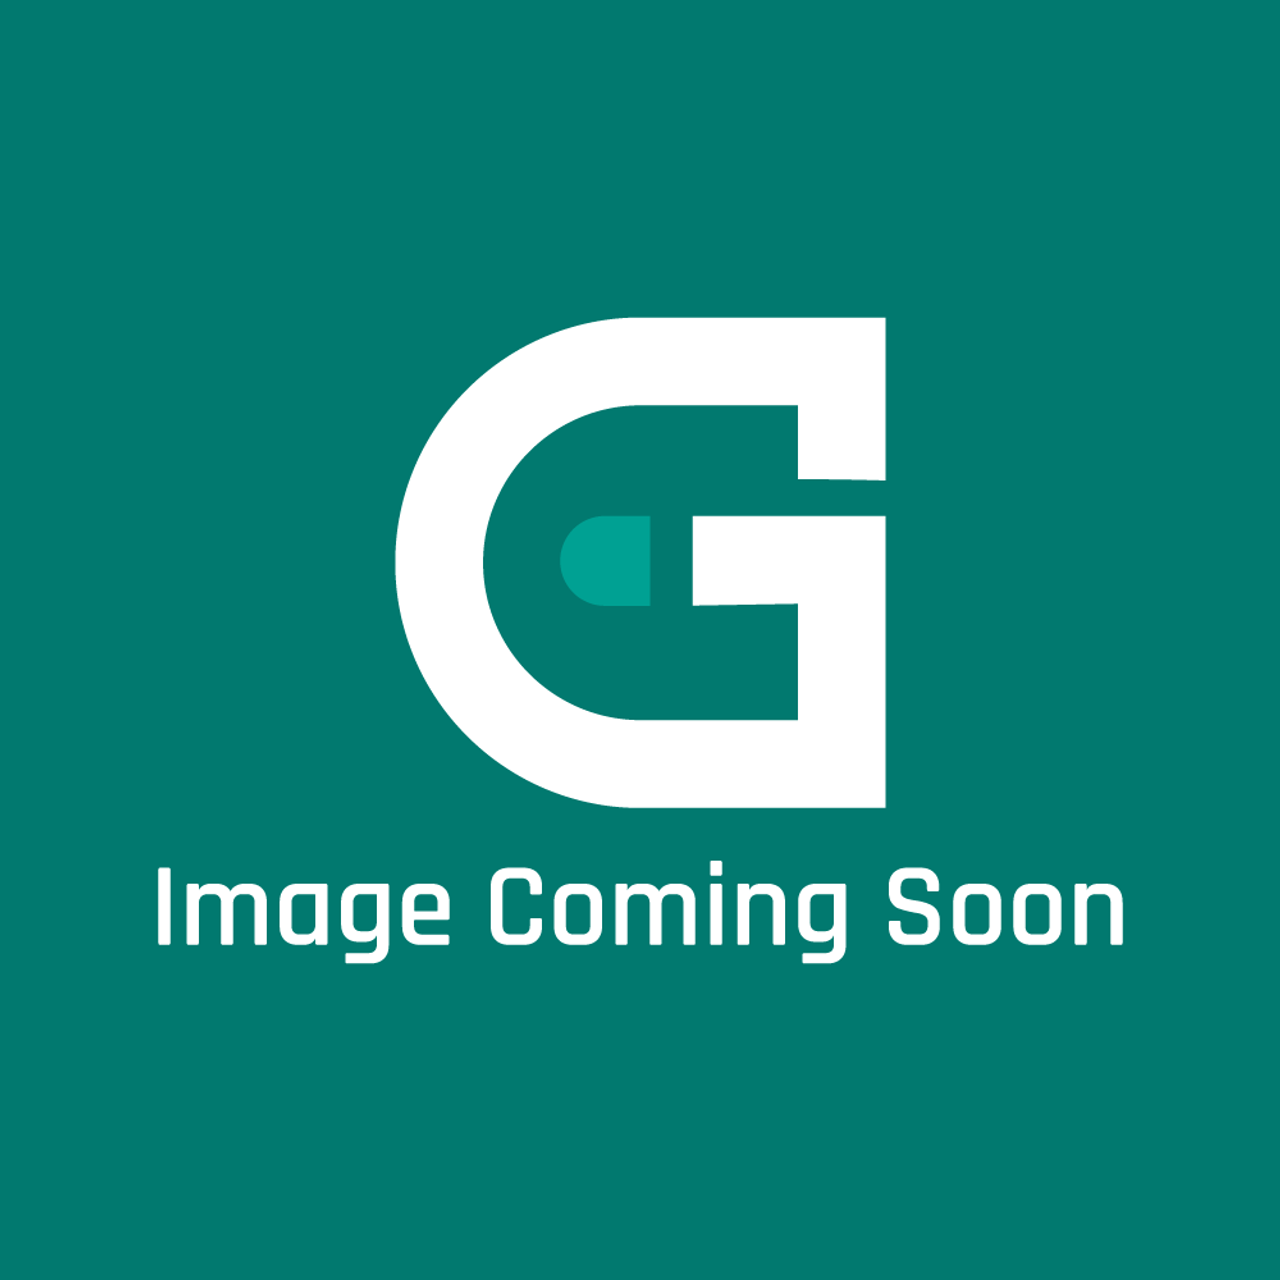 AGA Marvel A4767 - Top Rh Frame S/M Assy 4:2 Aga - Image Coming Soon!